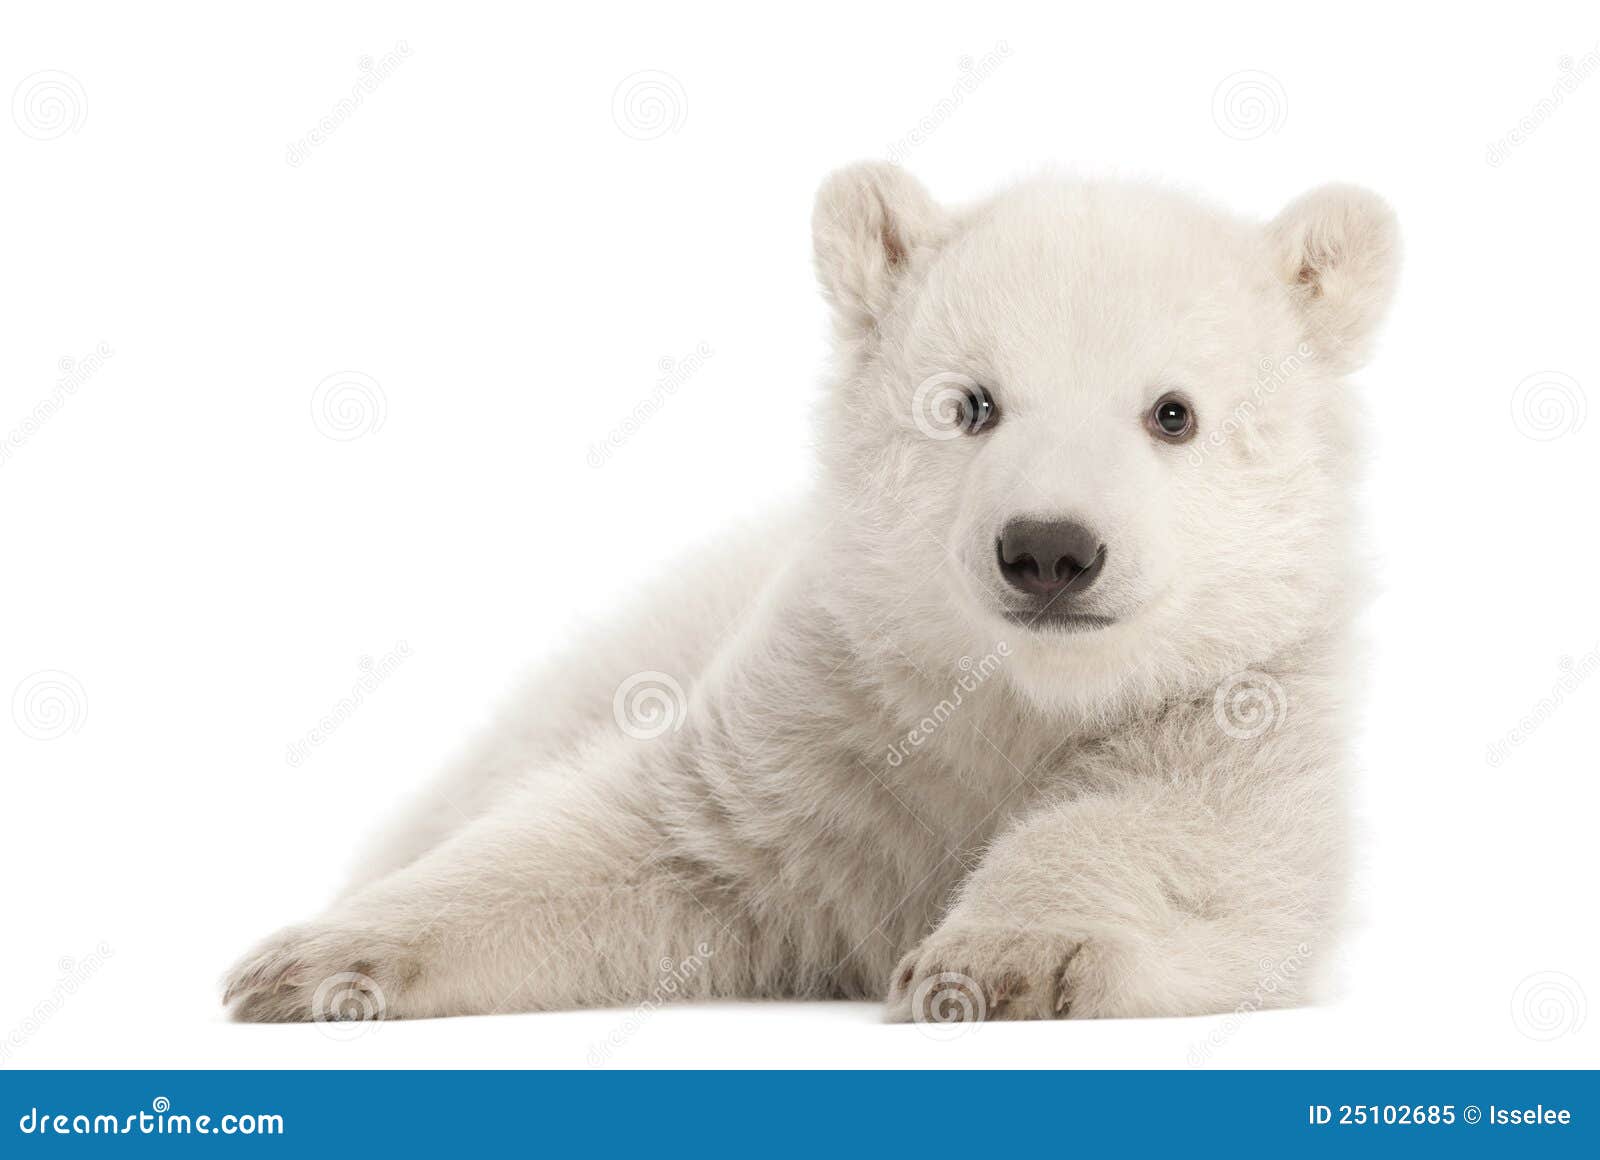 polar bear cub, ursus maritimus, 3 months old